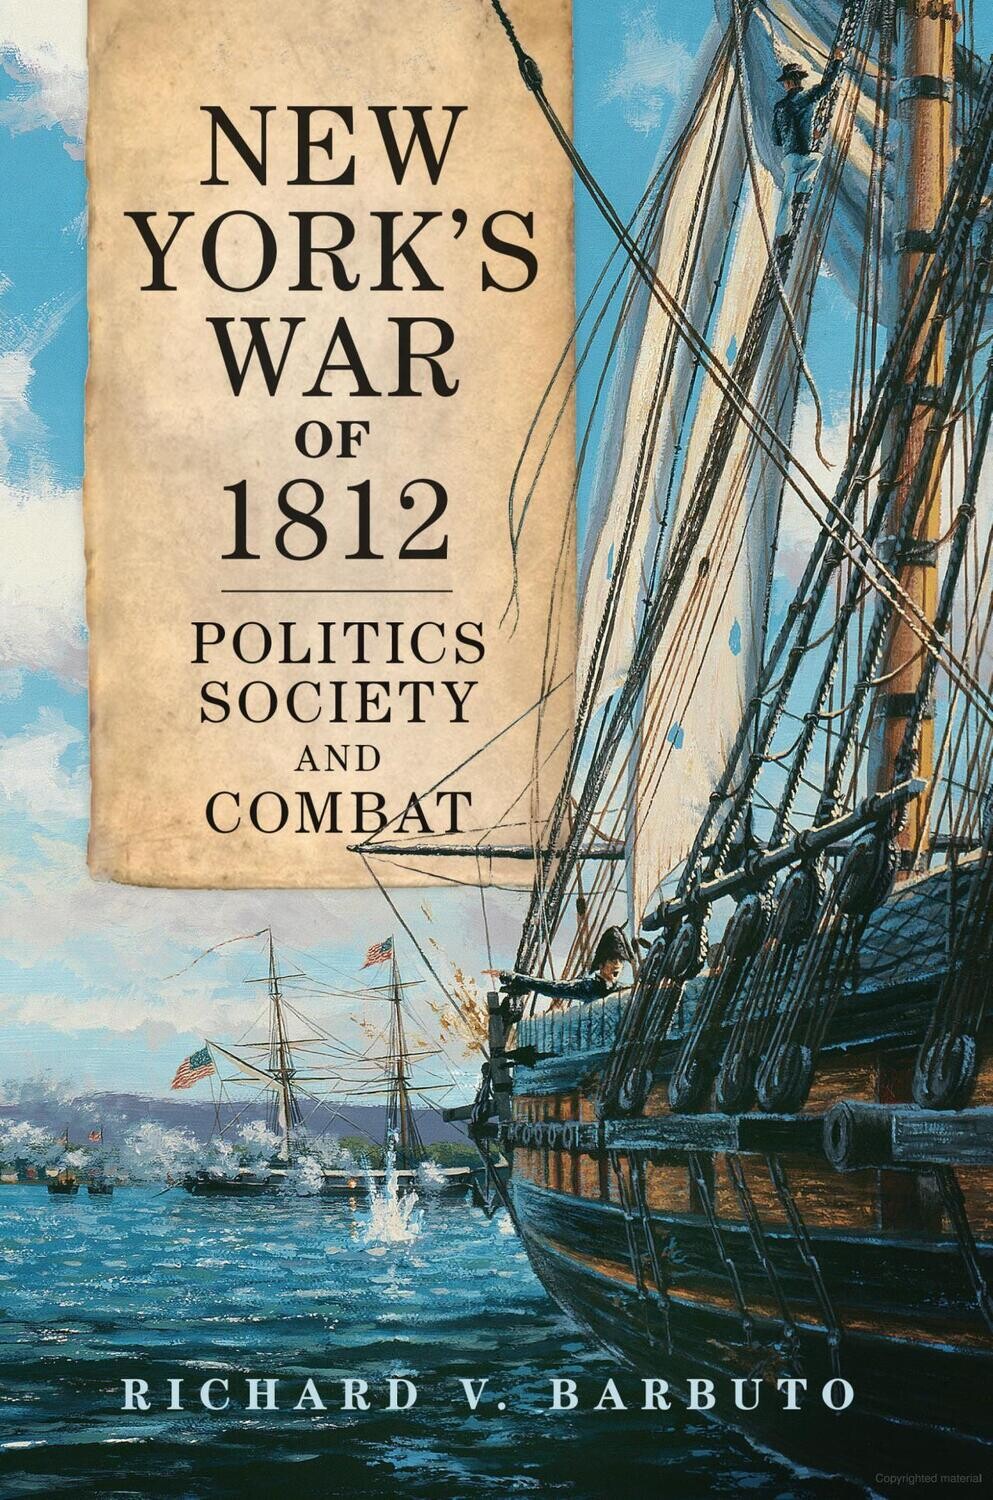 New York's War of 1812: Politics, Society and Combat by: Richard V. Barbuto